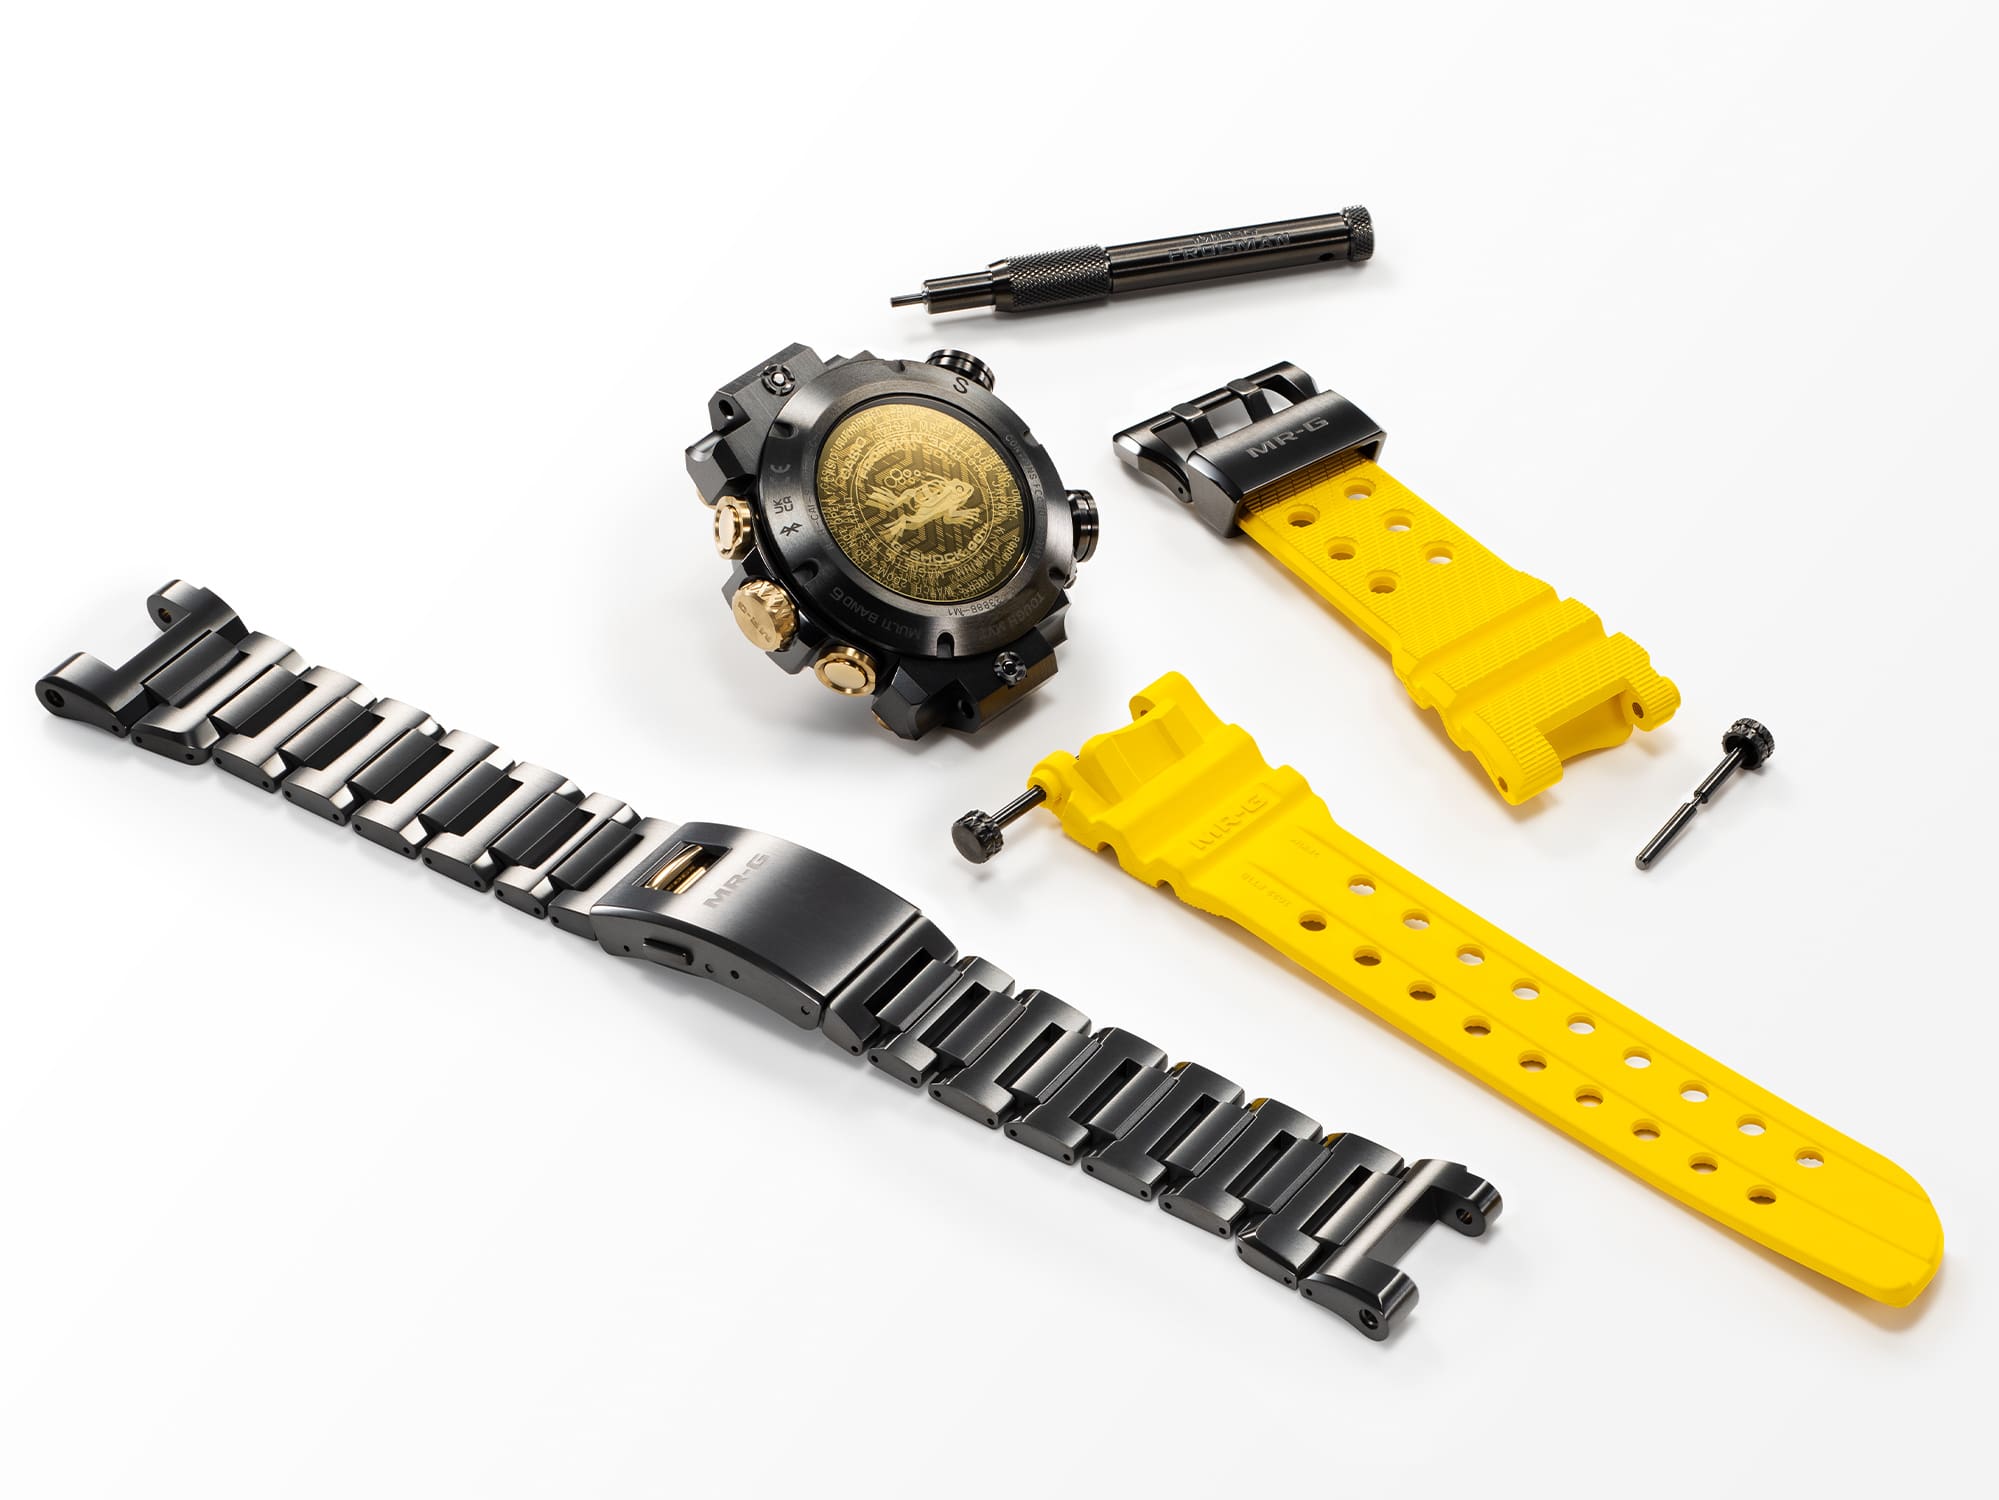 G-SHOCK mrgbf1000e-1a9 analog watch with yellow band disassembled